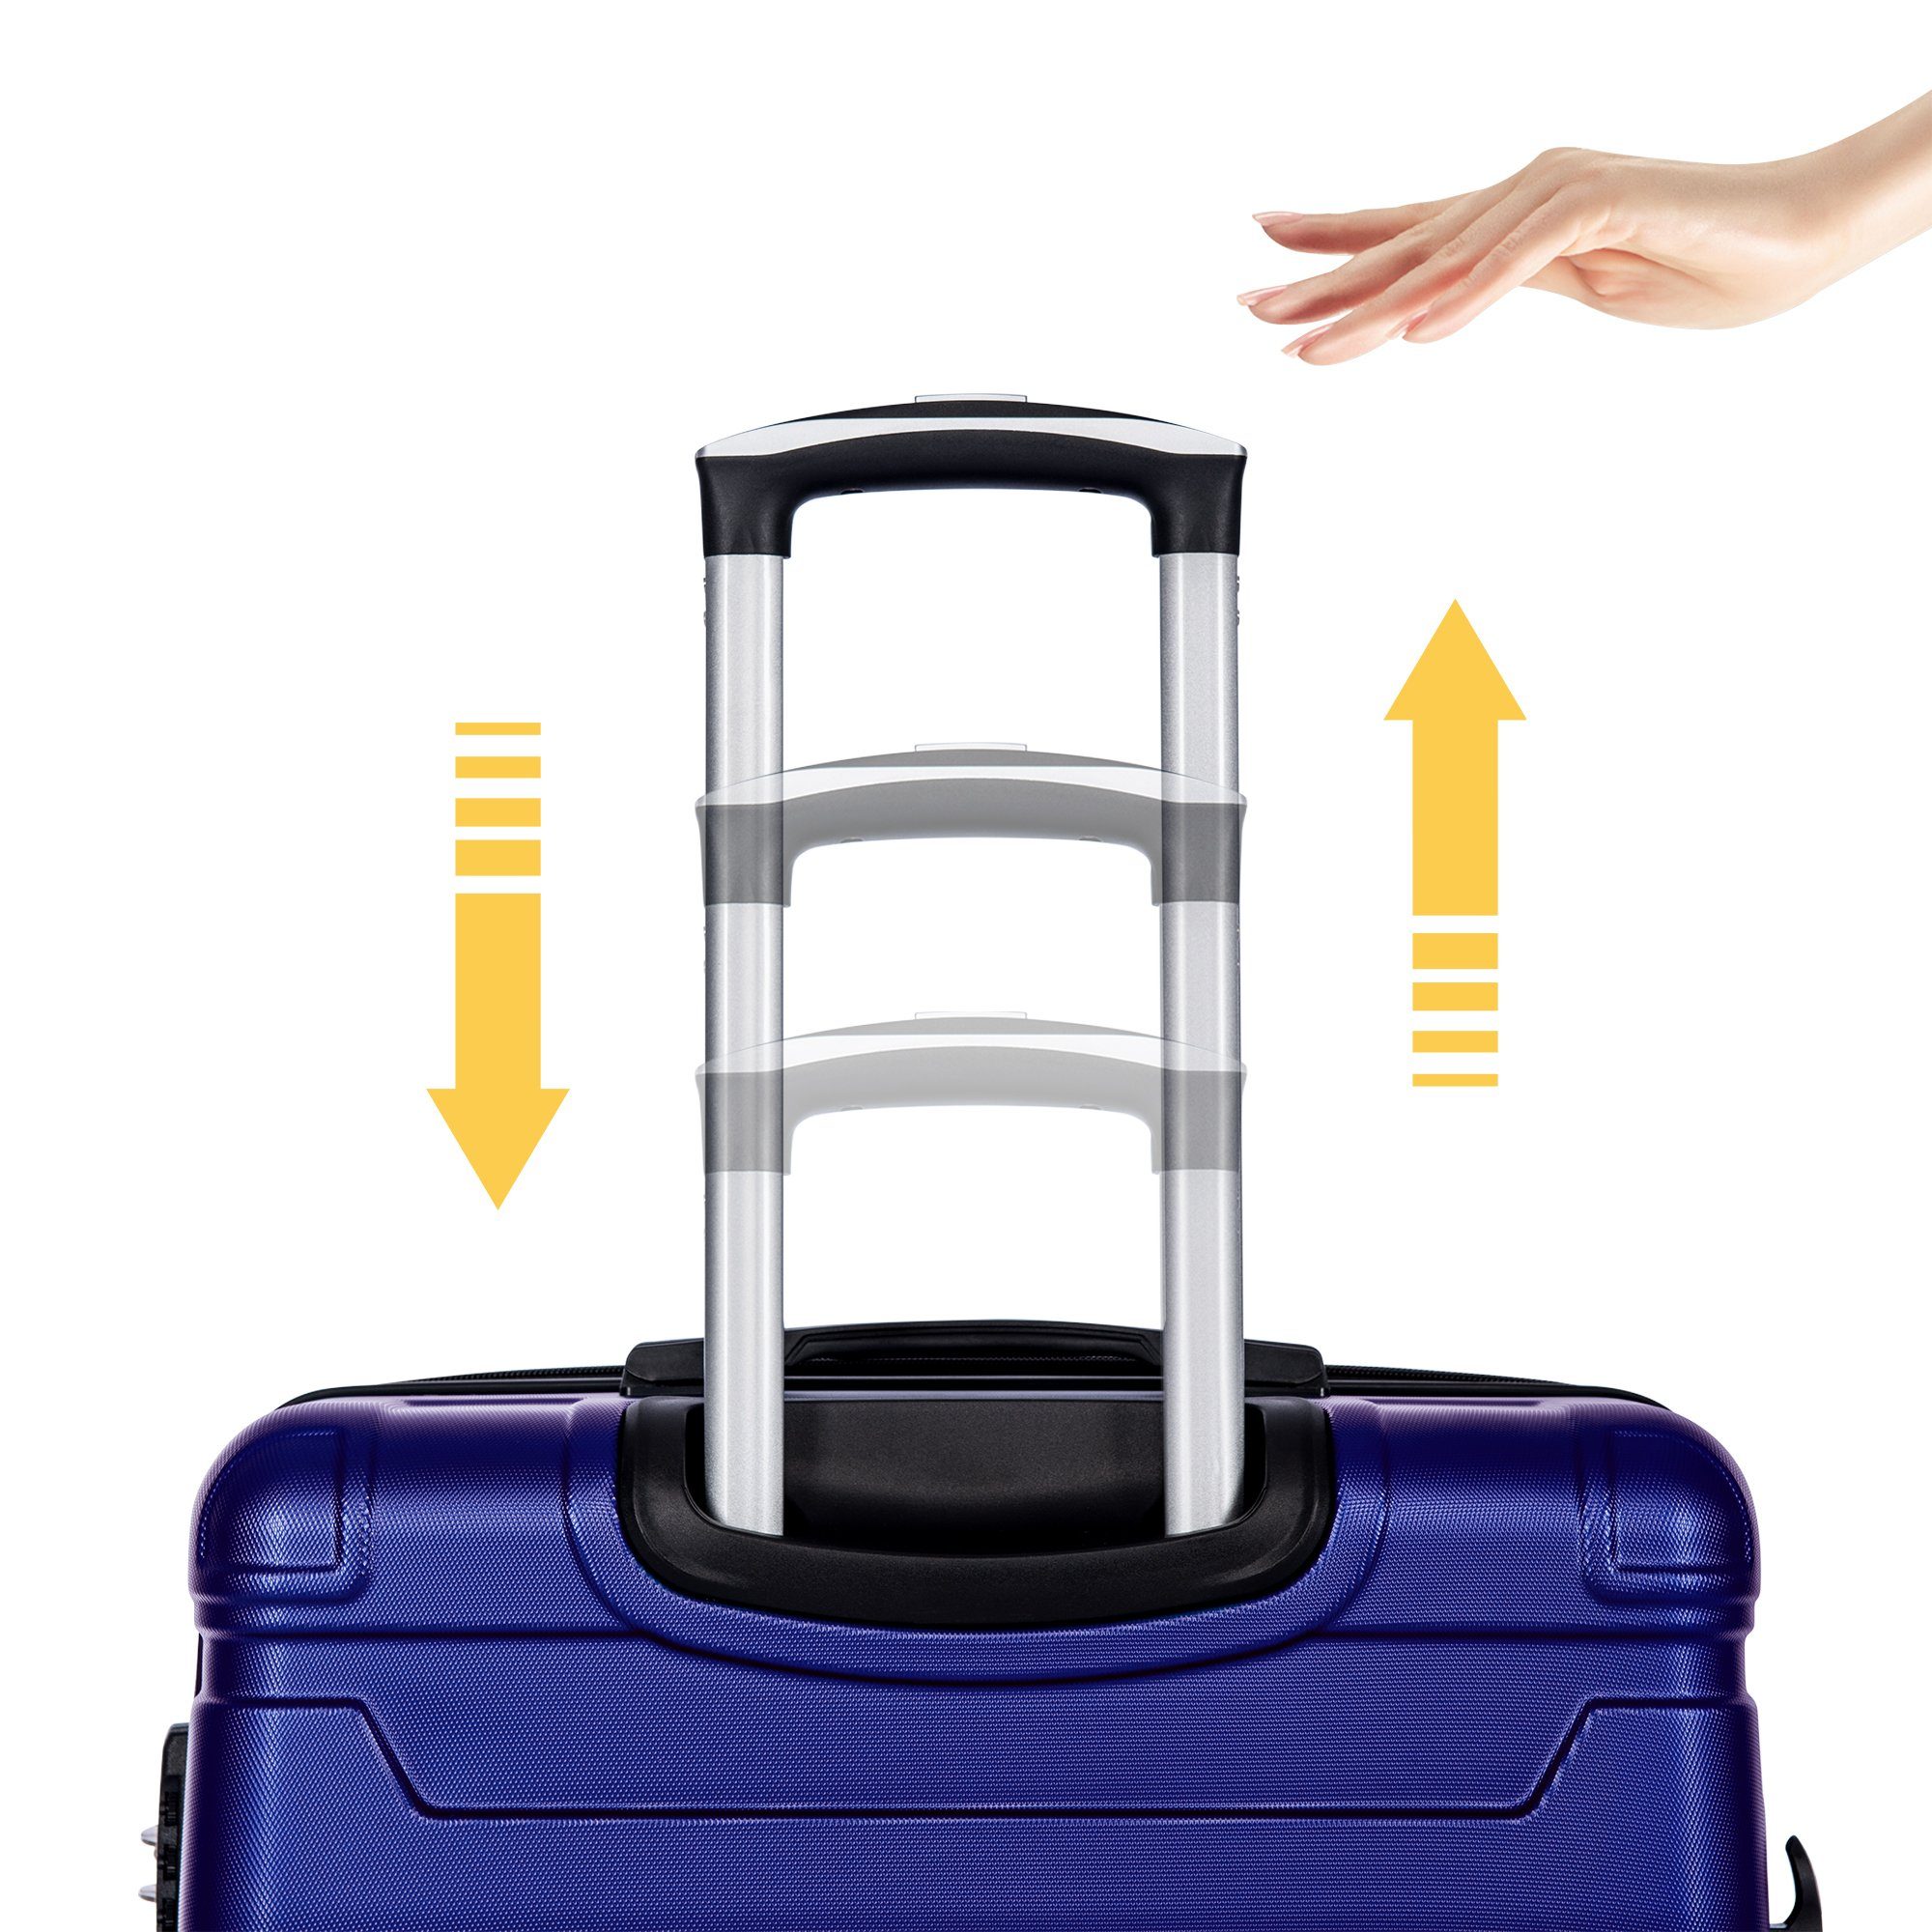 Odikalo Set,vieleFarbe TSA-Schloss blau & Handgepäck m. Handgepäckkoffer Universalrad,Erweiterbar,3